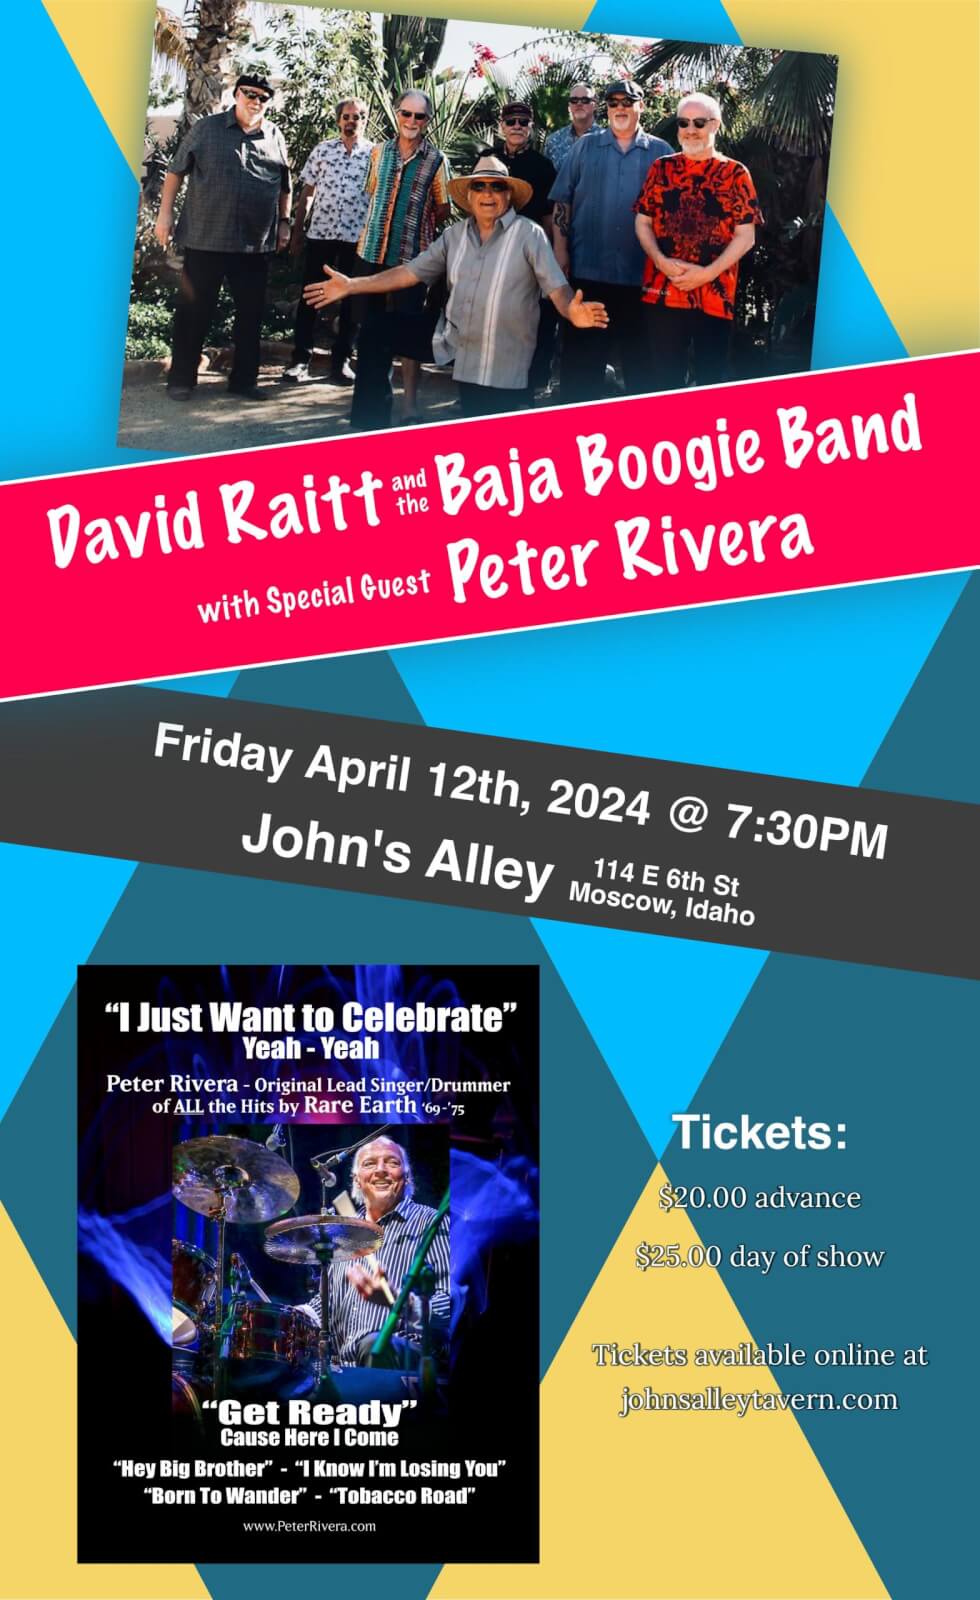 John's Alley presents David Raitt and the Baja Boogie Band